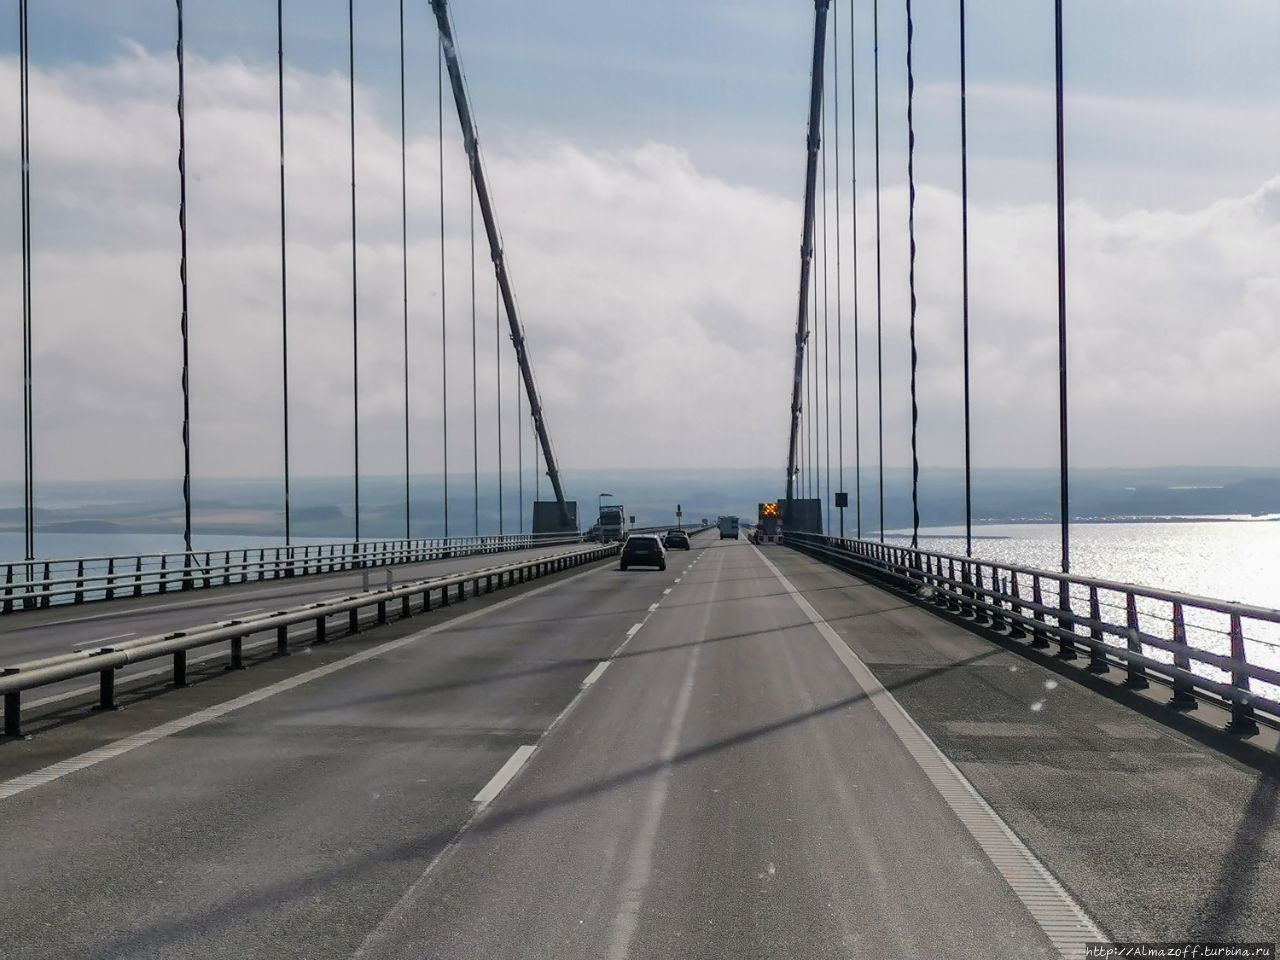 Мост Большой Бельт Корсёр, Дания